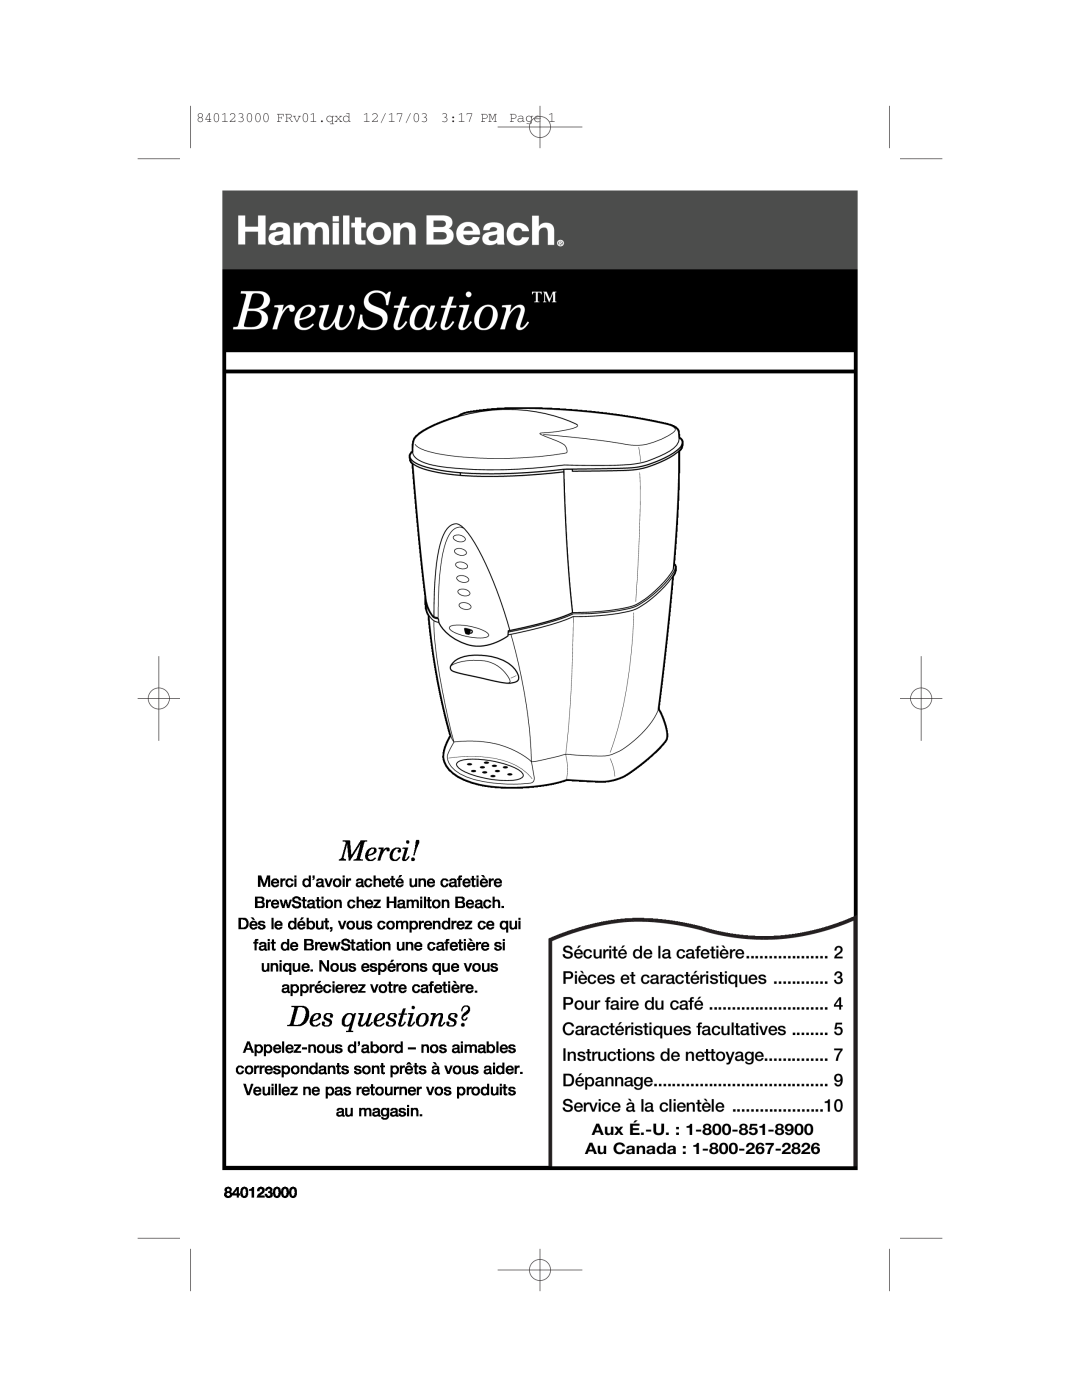 Hamilton Beach 840123000 manual Merci, Des questions?, BrewStation, Aux É.-U. 1-800-851-8900 Au Canada 